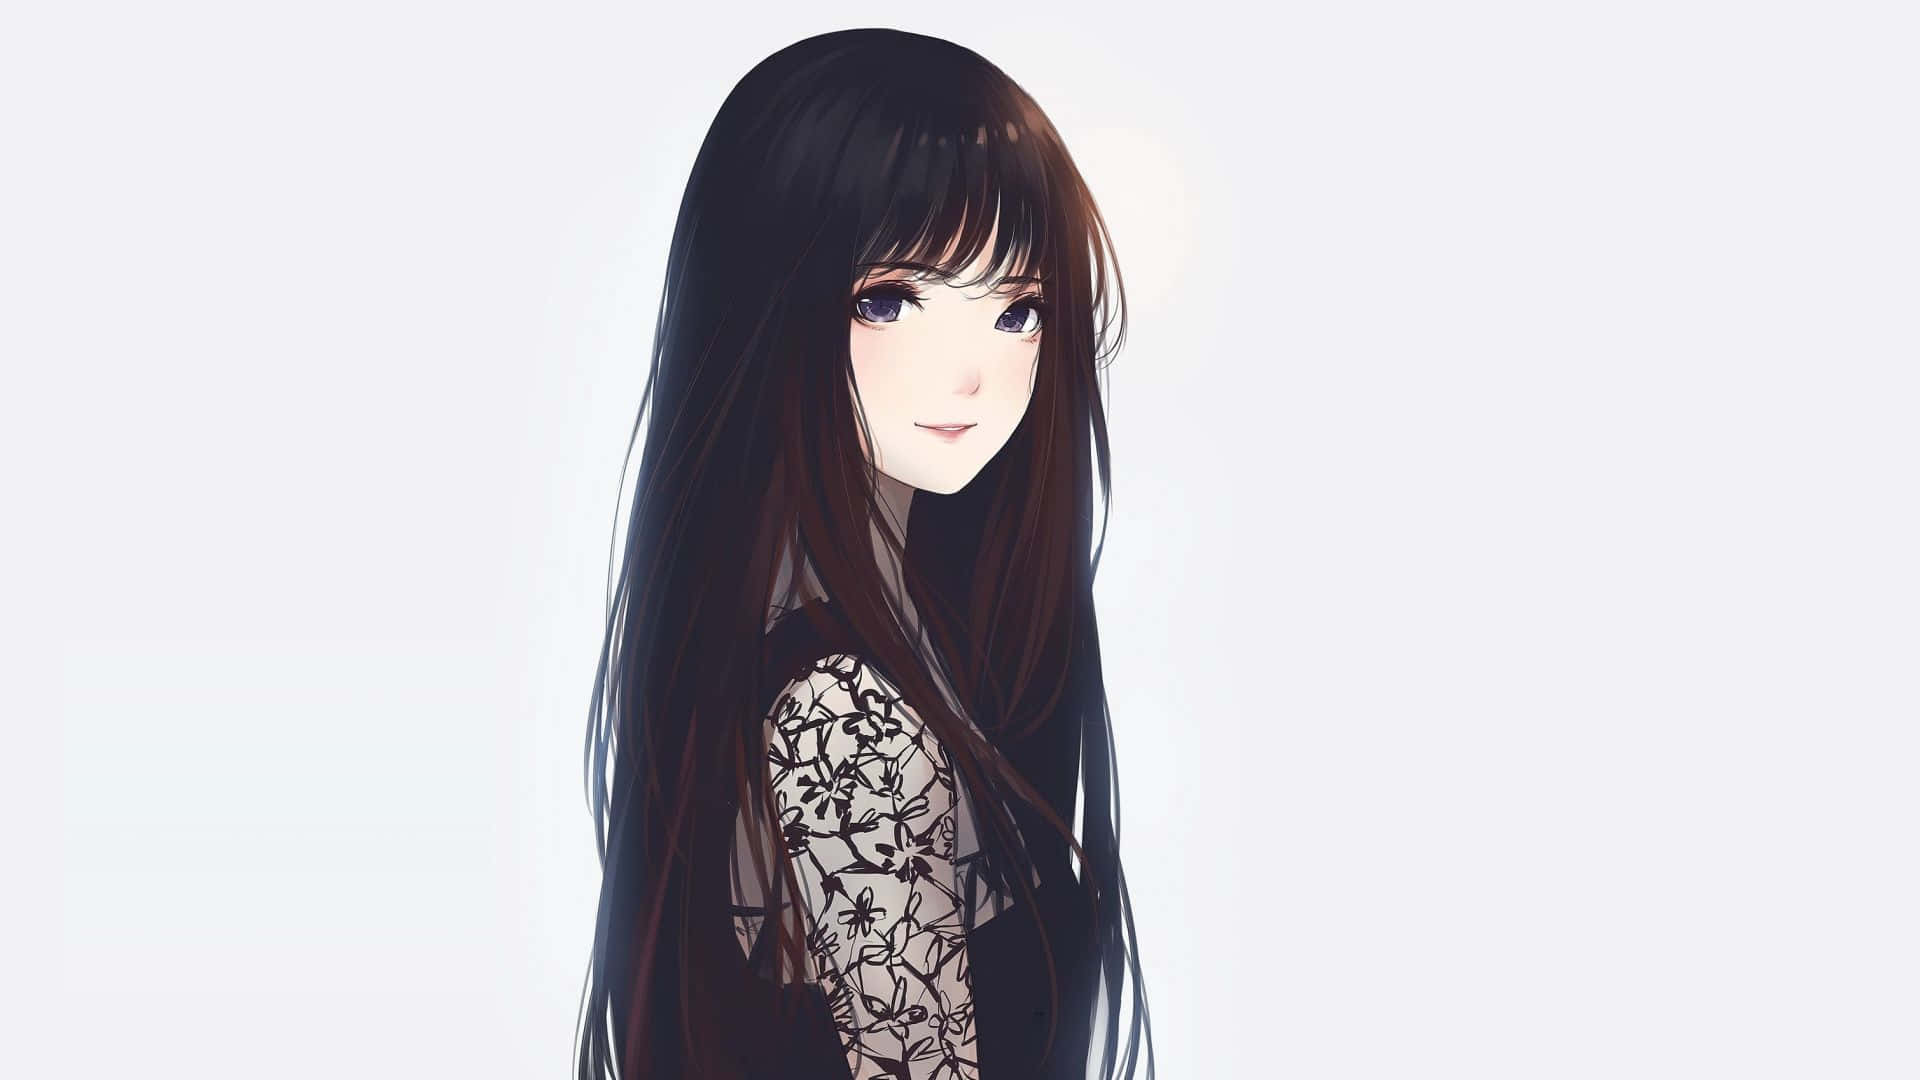 A confident anime girl with deep black hair. Wallpaper